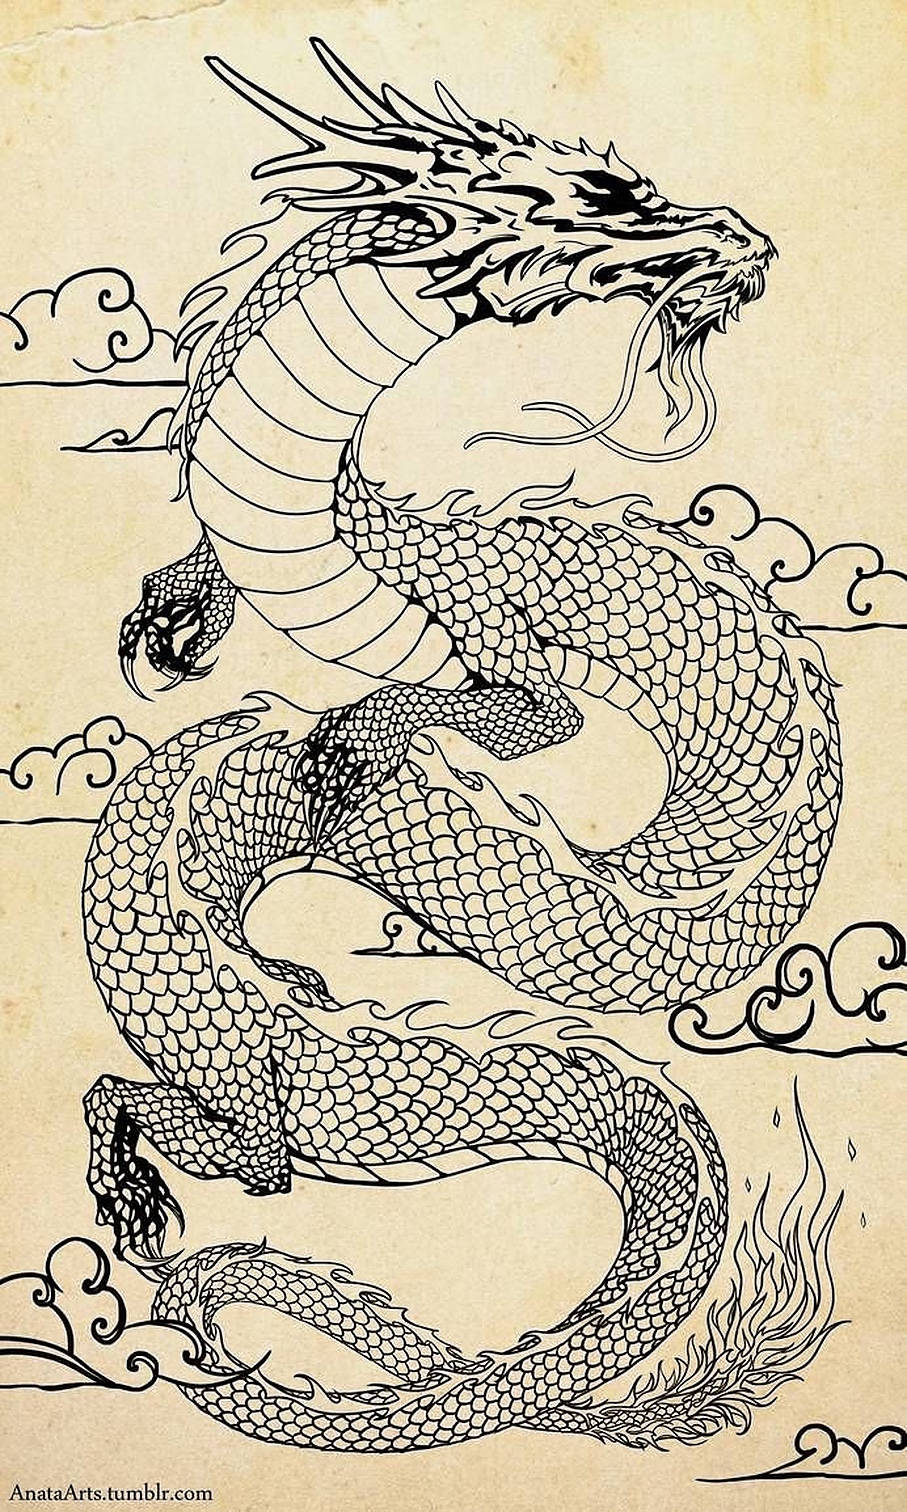 Japanskdrak-tatueringsskiss Wallpaper